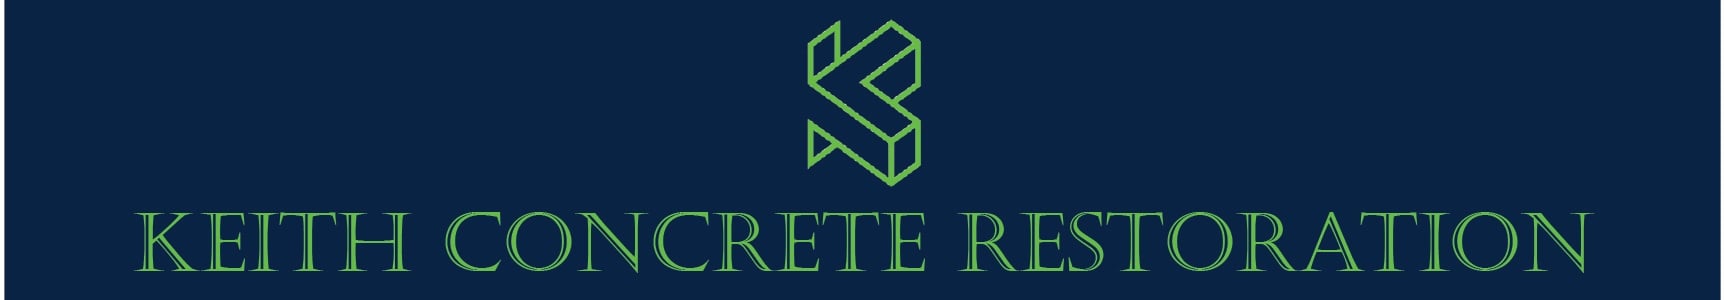 Keith Concrete Restroration Logo